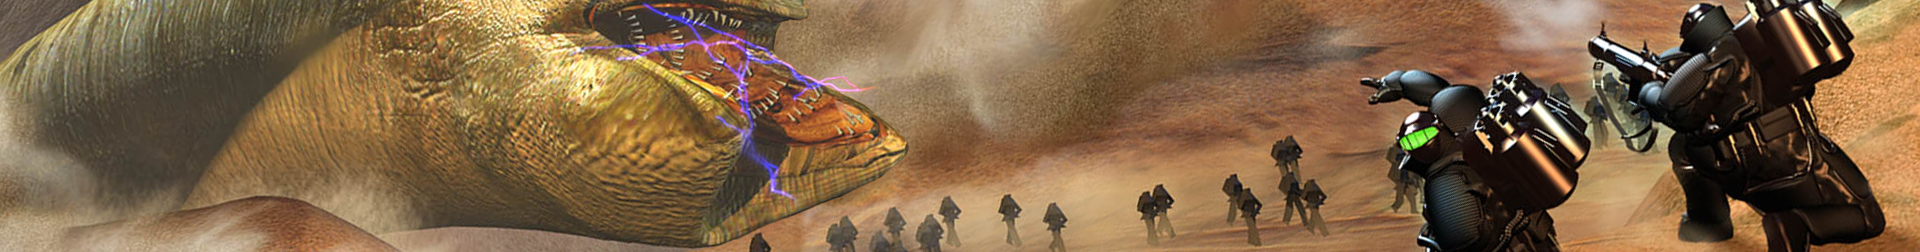 Emperor Battle for Dune Banner